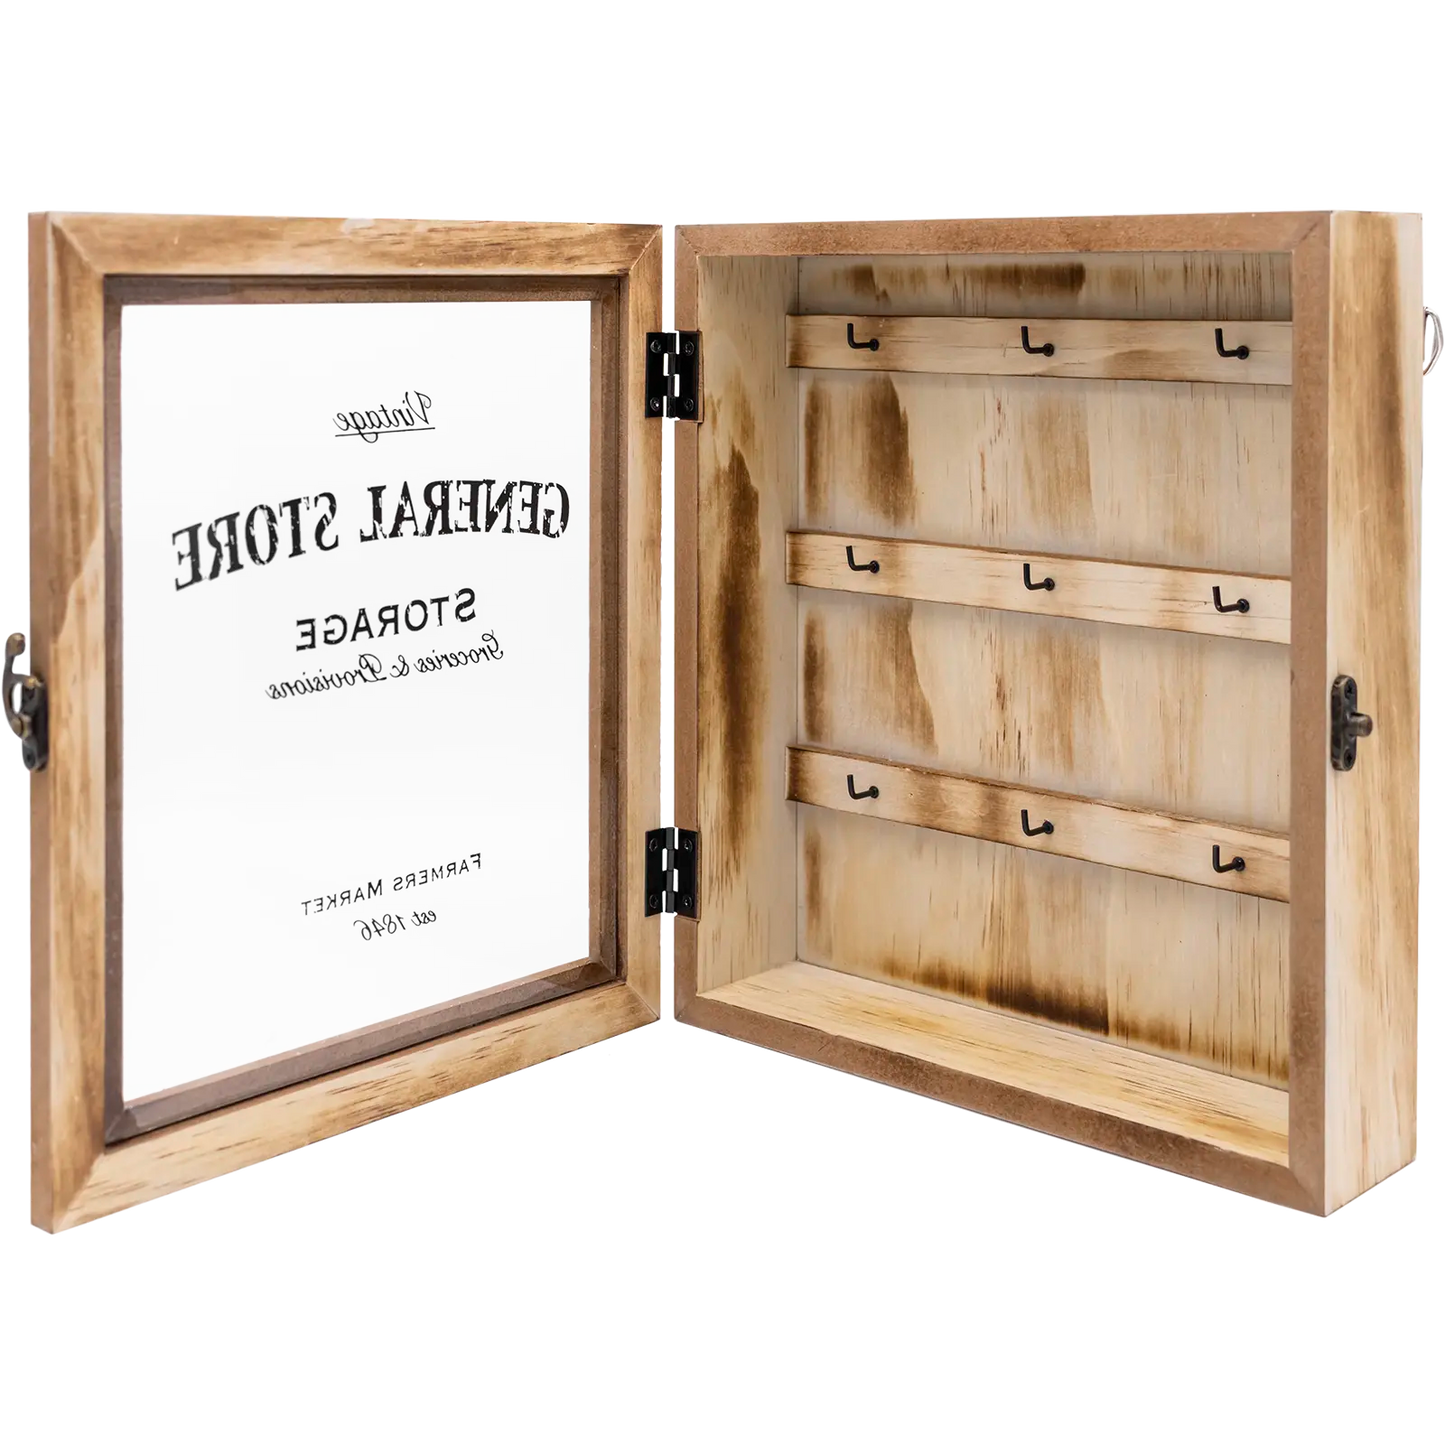 Farmhouse 9 Key Hook Holder Box Cabinet